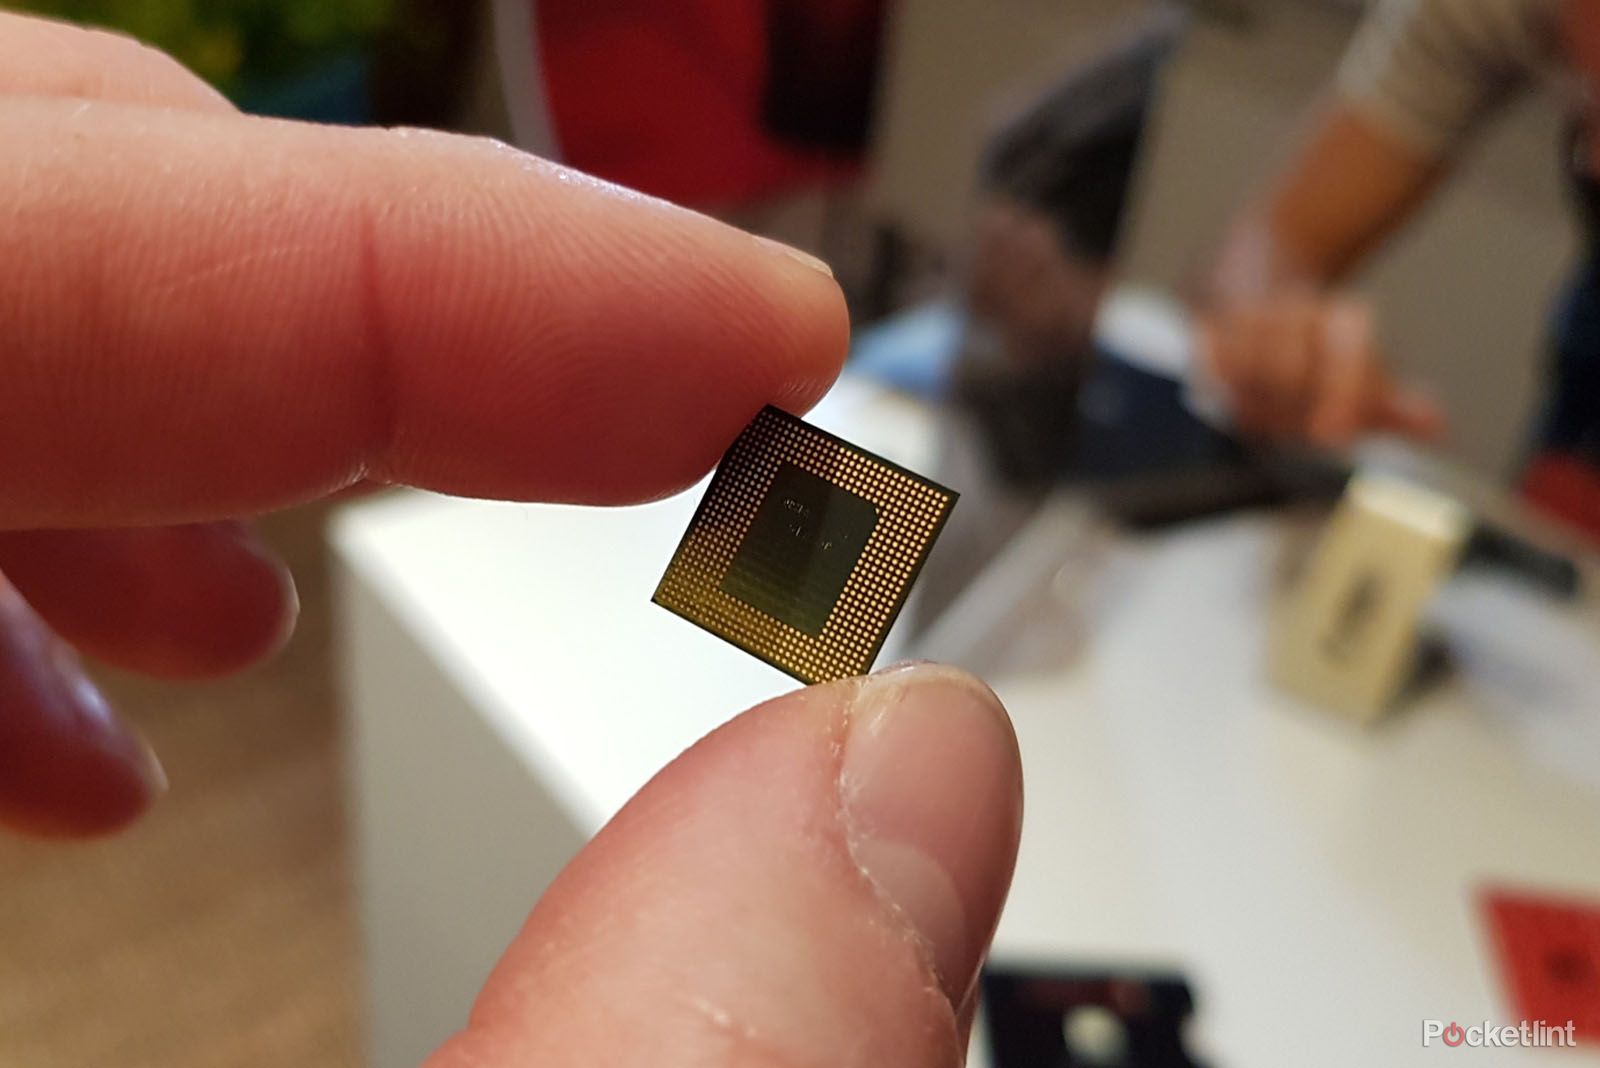 Qualcomm Snapdragon 845 chip between fingers